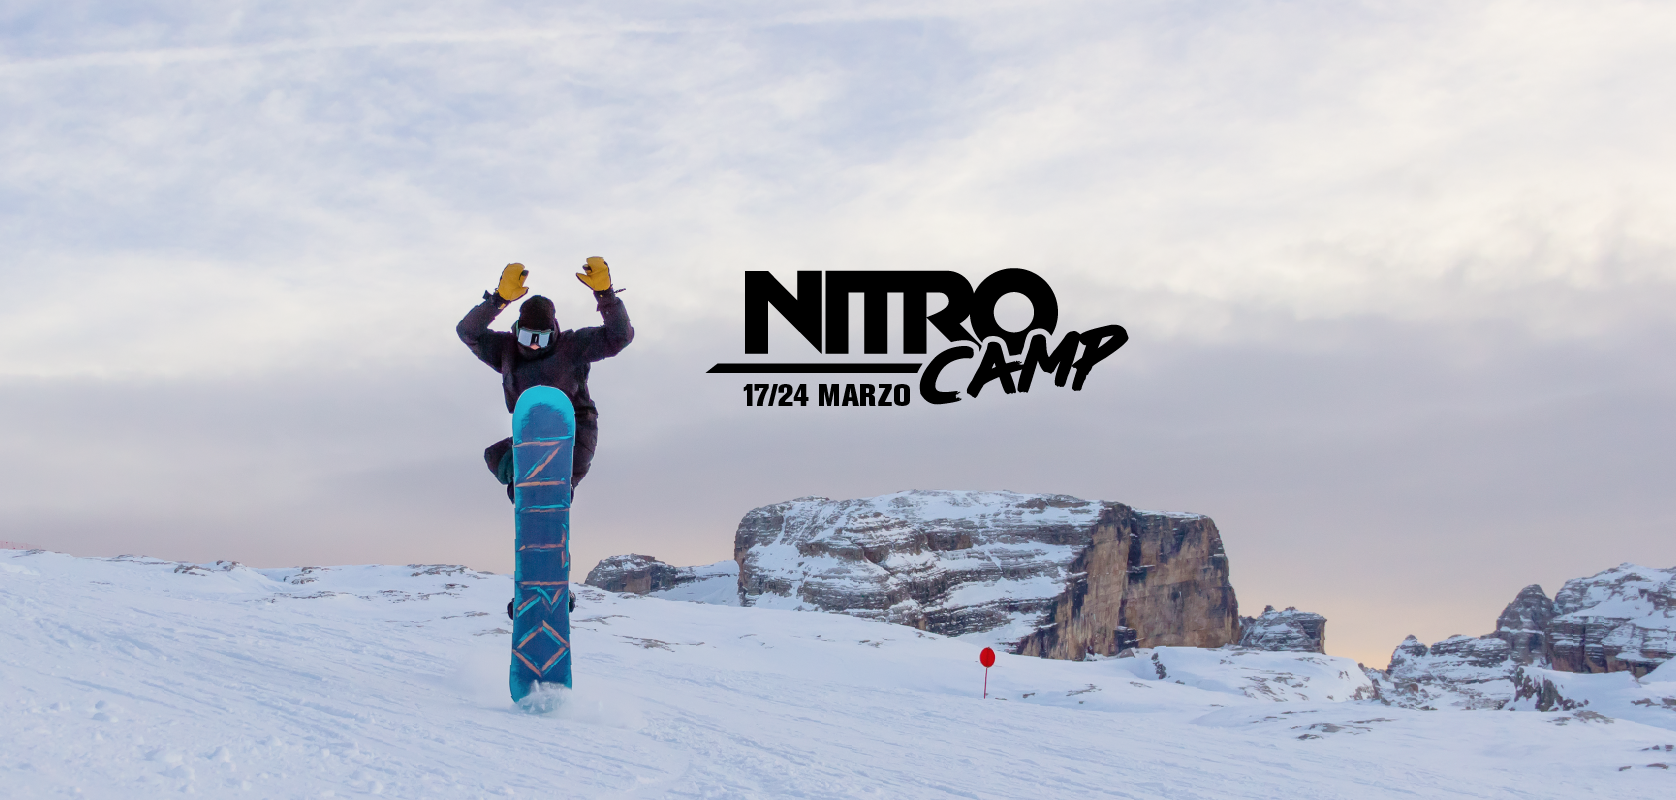 Nitro Camp 2018